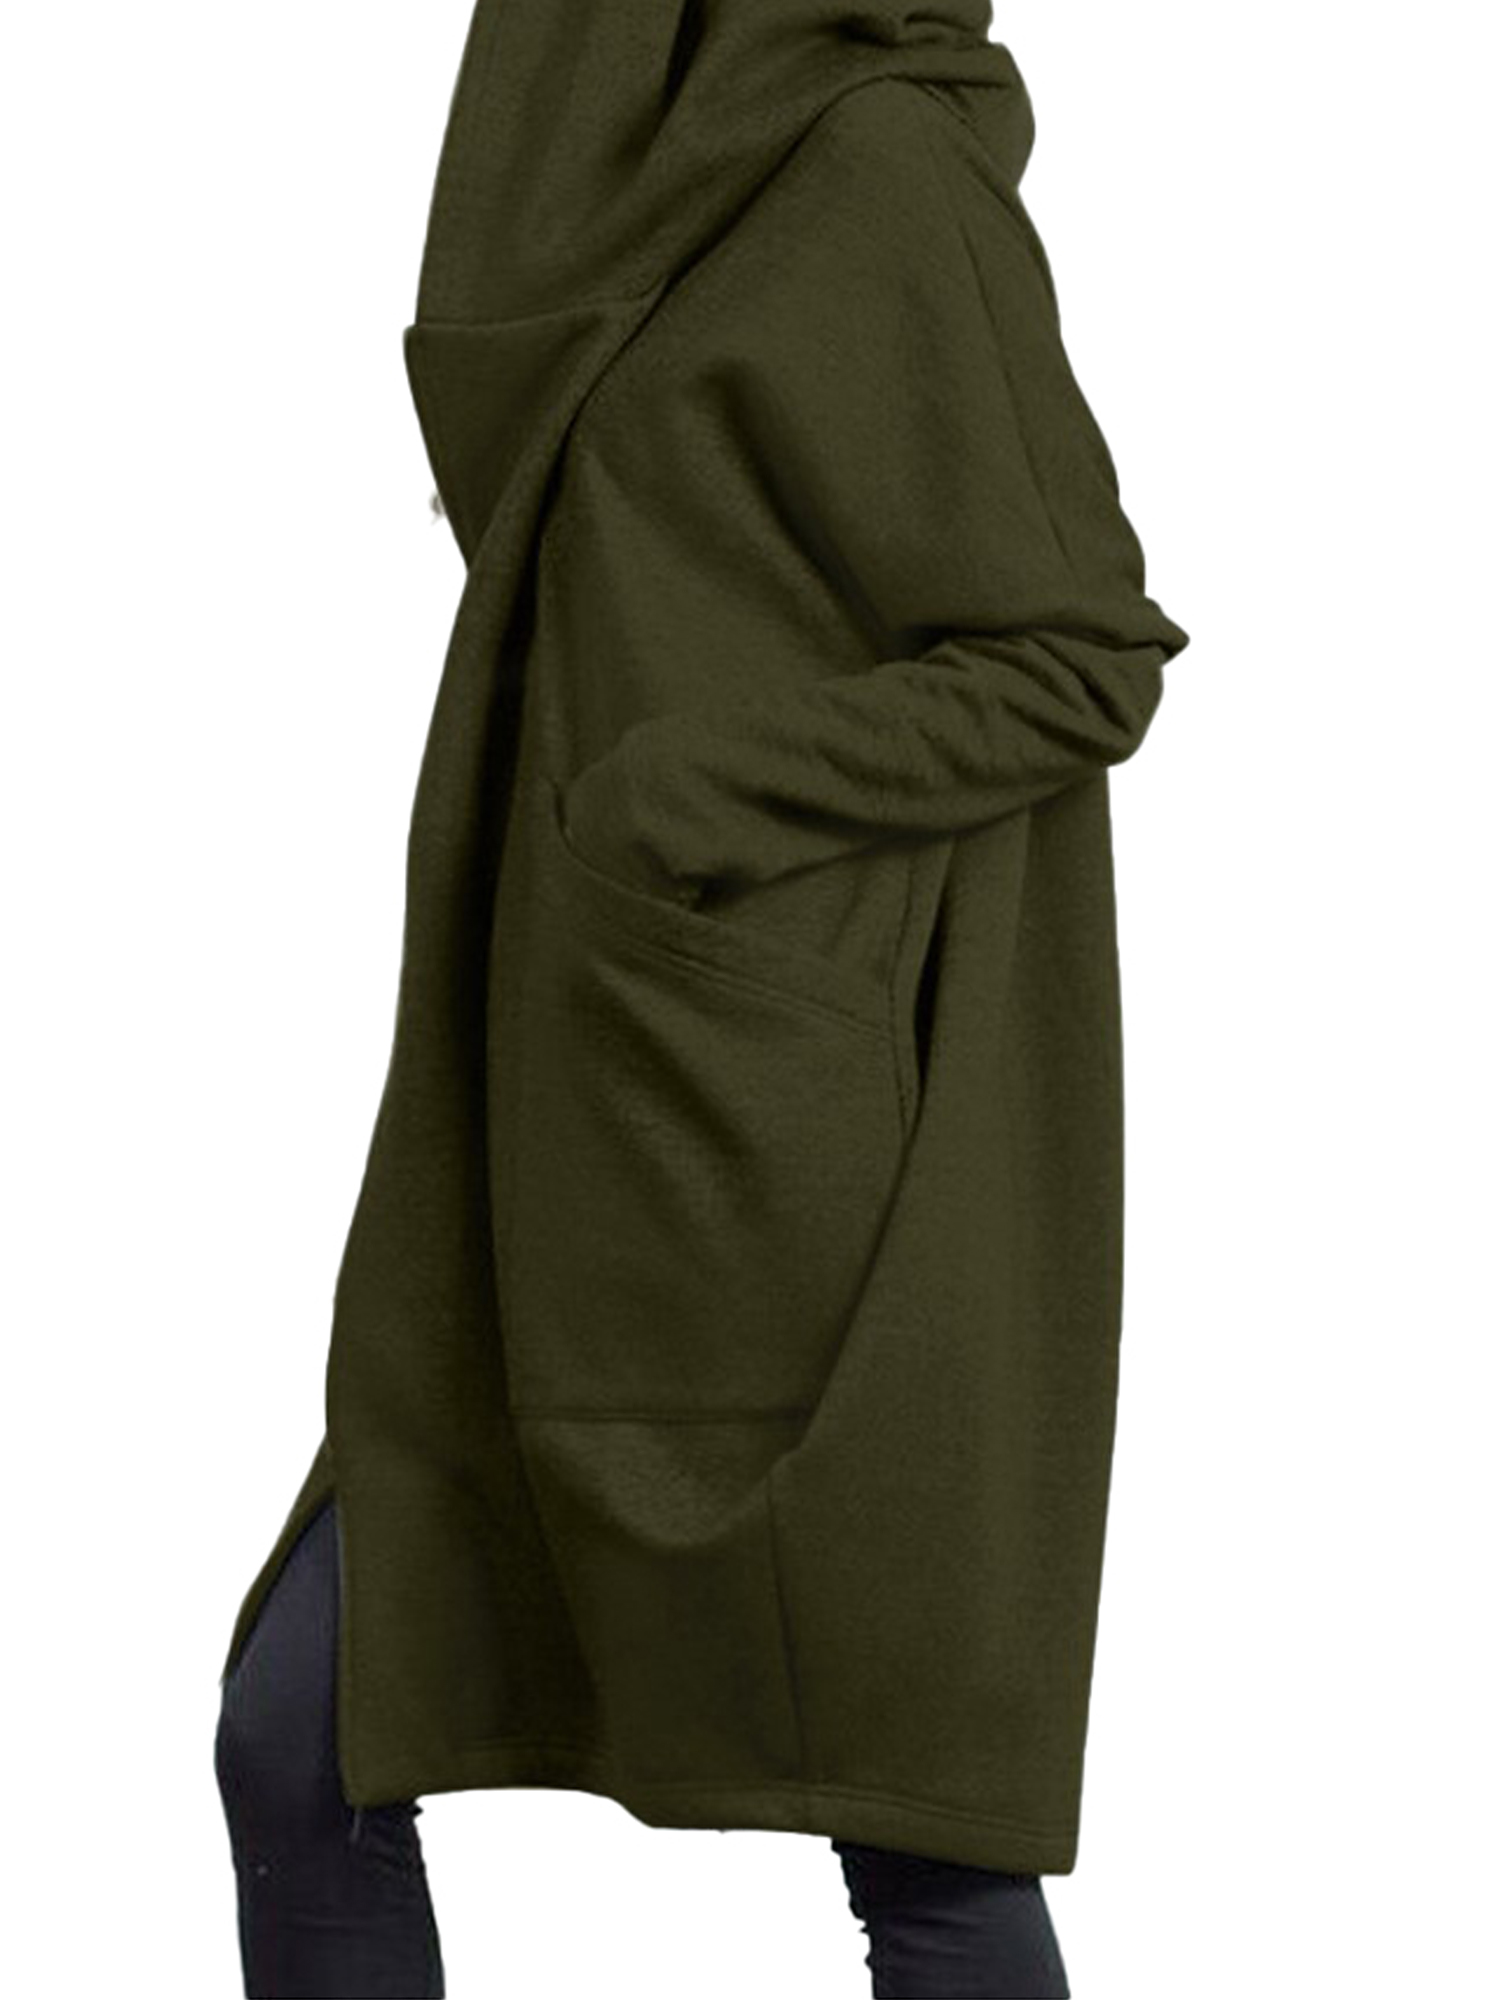 Ladies Plus Size Zipper Hoodies Mid-Length Loose Coat Casual Pocket Jackets Women Autumn Baggy Warm Overcoat Office Working Lounge Wear Women Plus Parkas Coats Anoraks - image 3 of 4